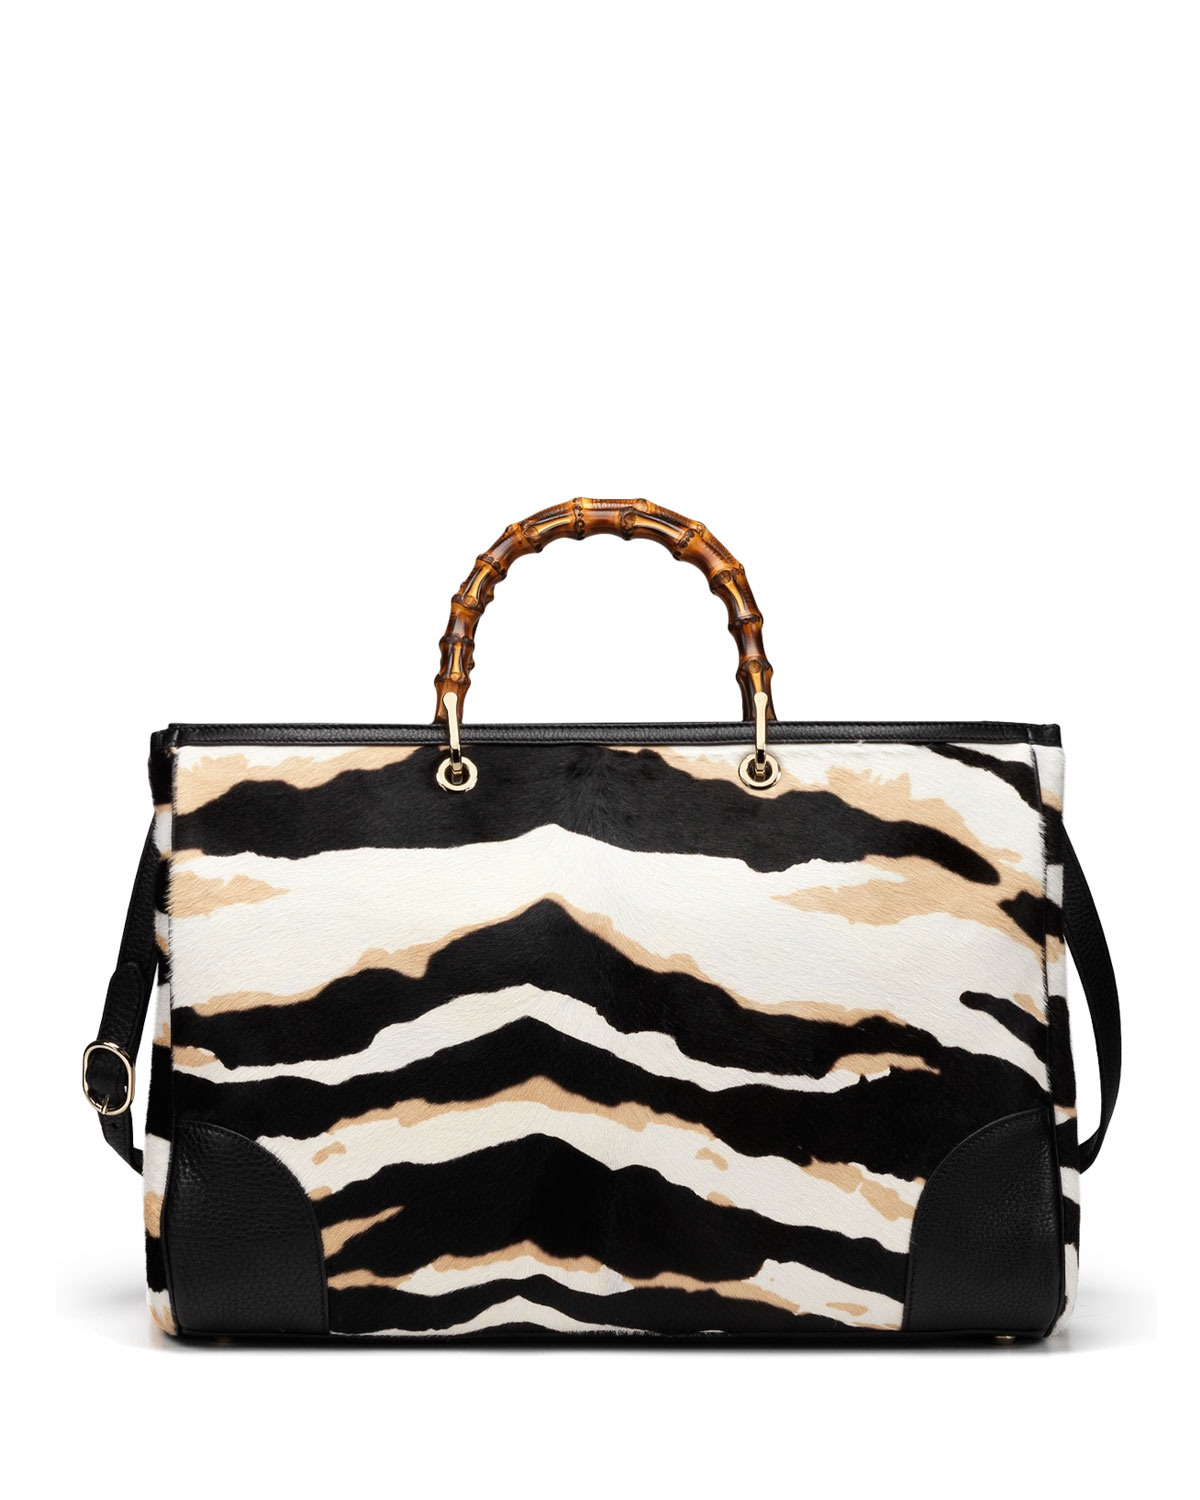 Lyst - Gucci Tigerprint Bamboo Large Shopper Tote Bag in Black